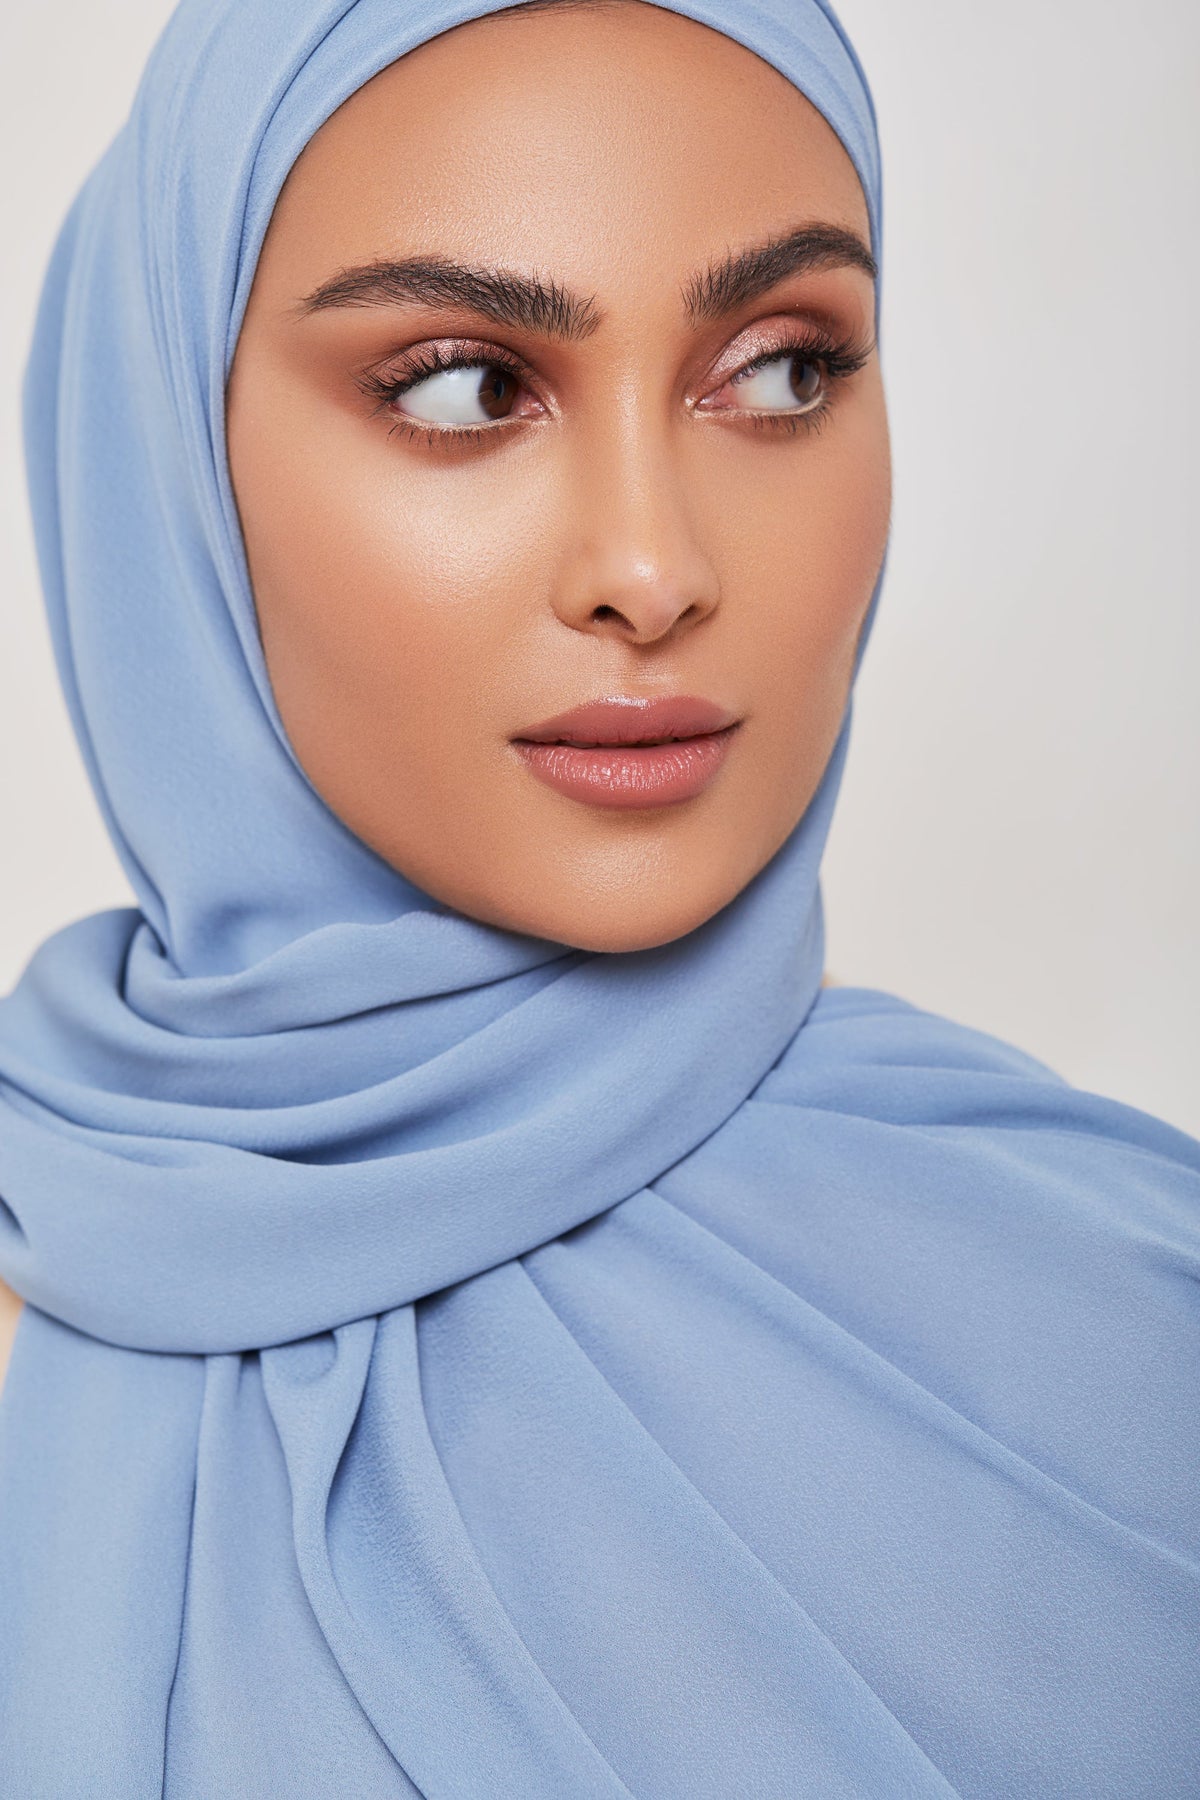 TEXTURE Everyday Chiffon Hijab - Feeling Blue epschoolboard 